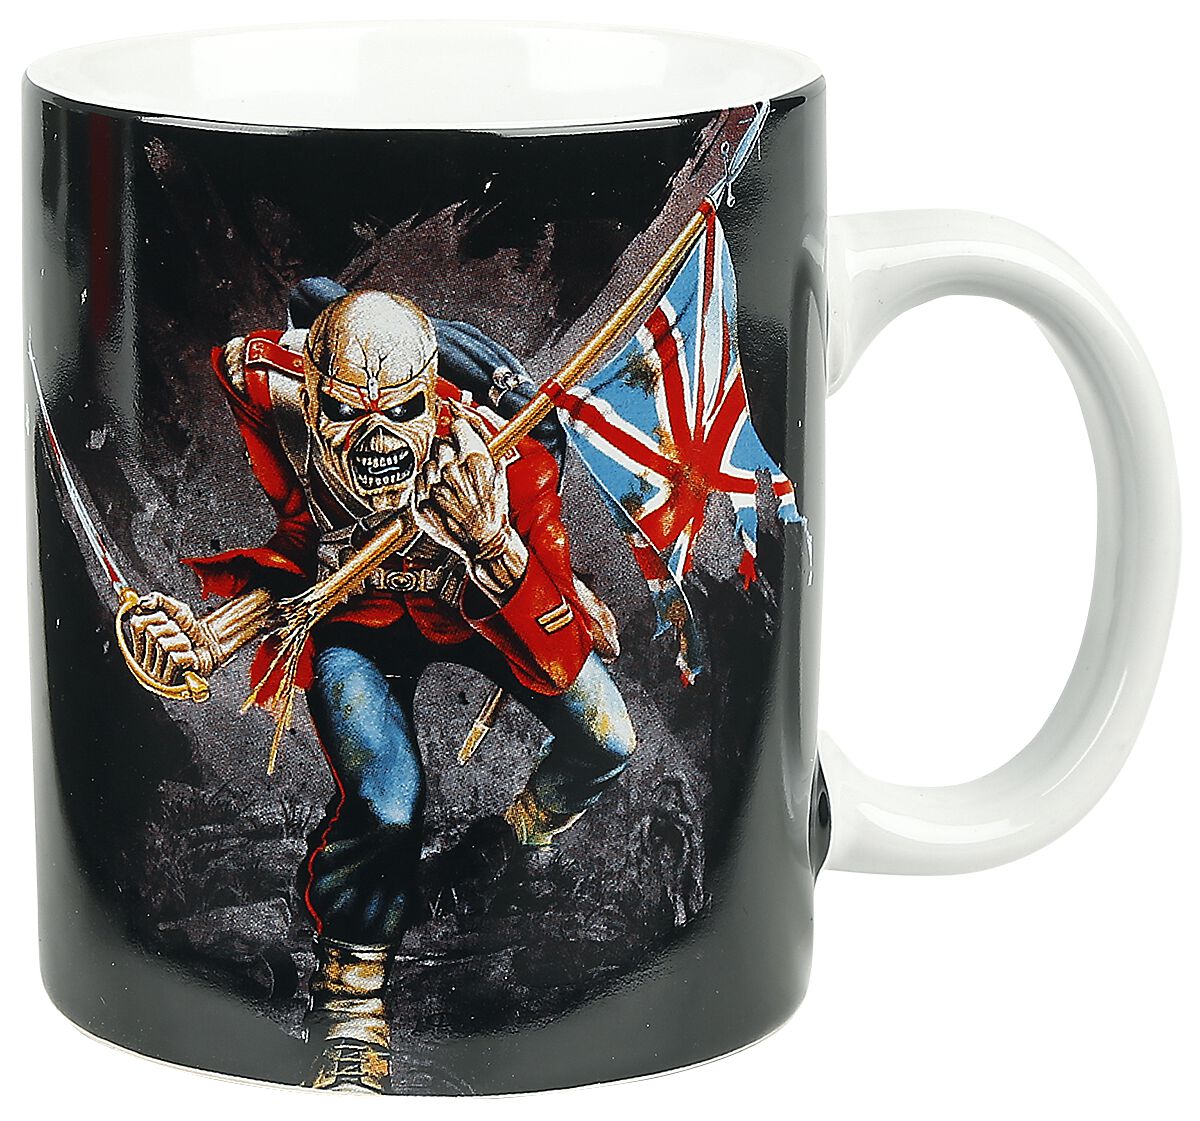 Mug de Iron Maiden - The trooper - pour Unisexe - blanc